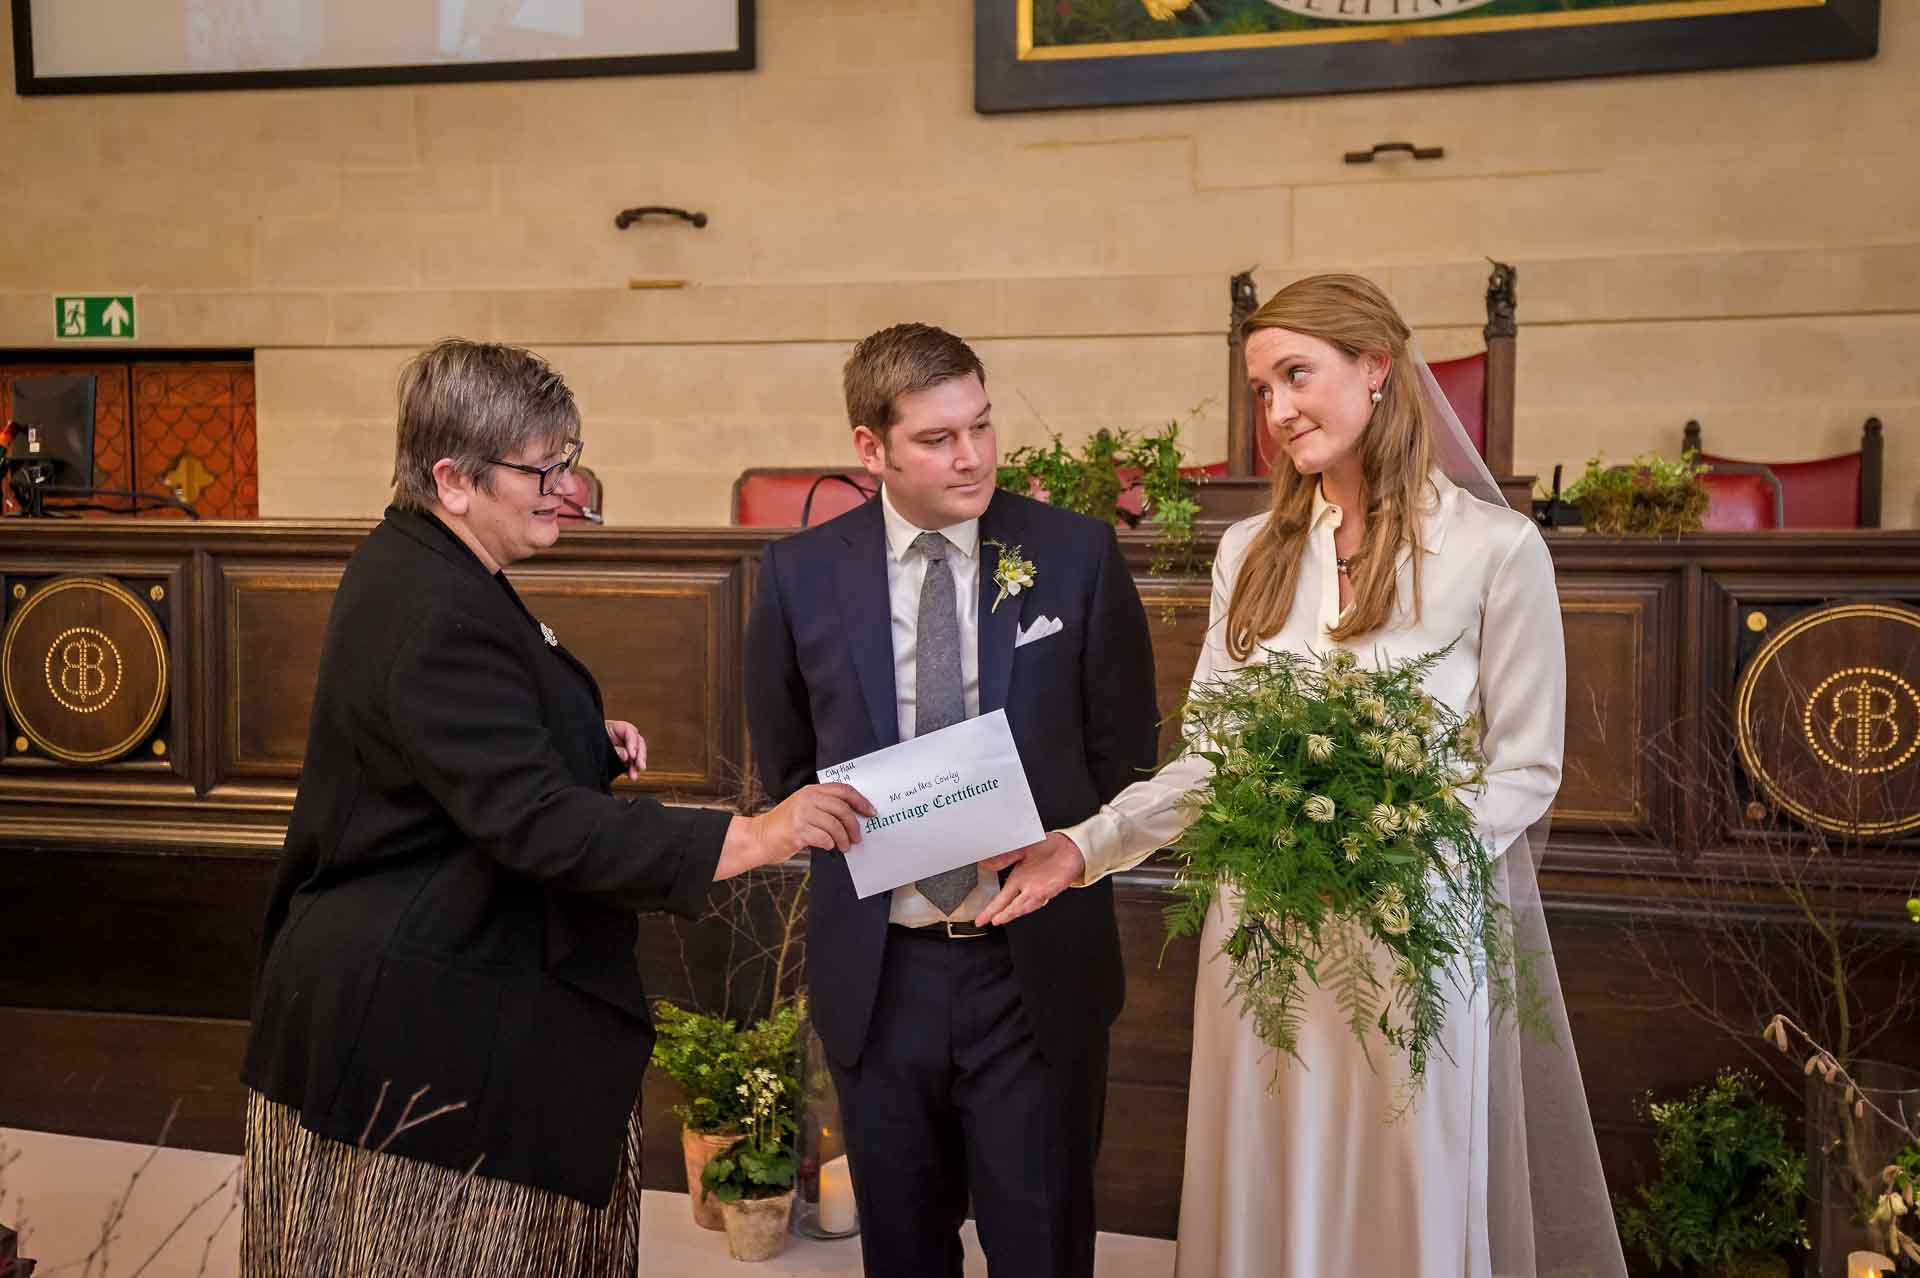 Bristol Registrar Hands Marriage Certificate to Bride at City Hall